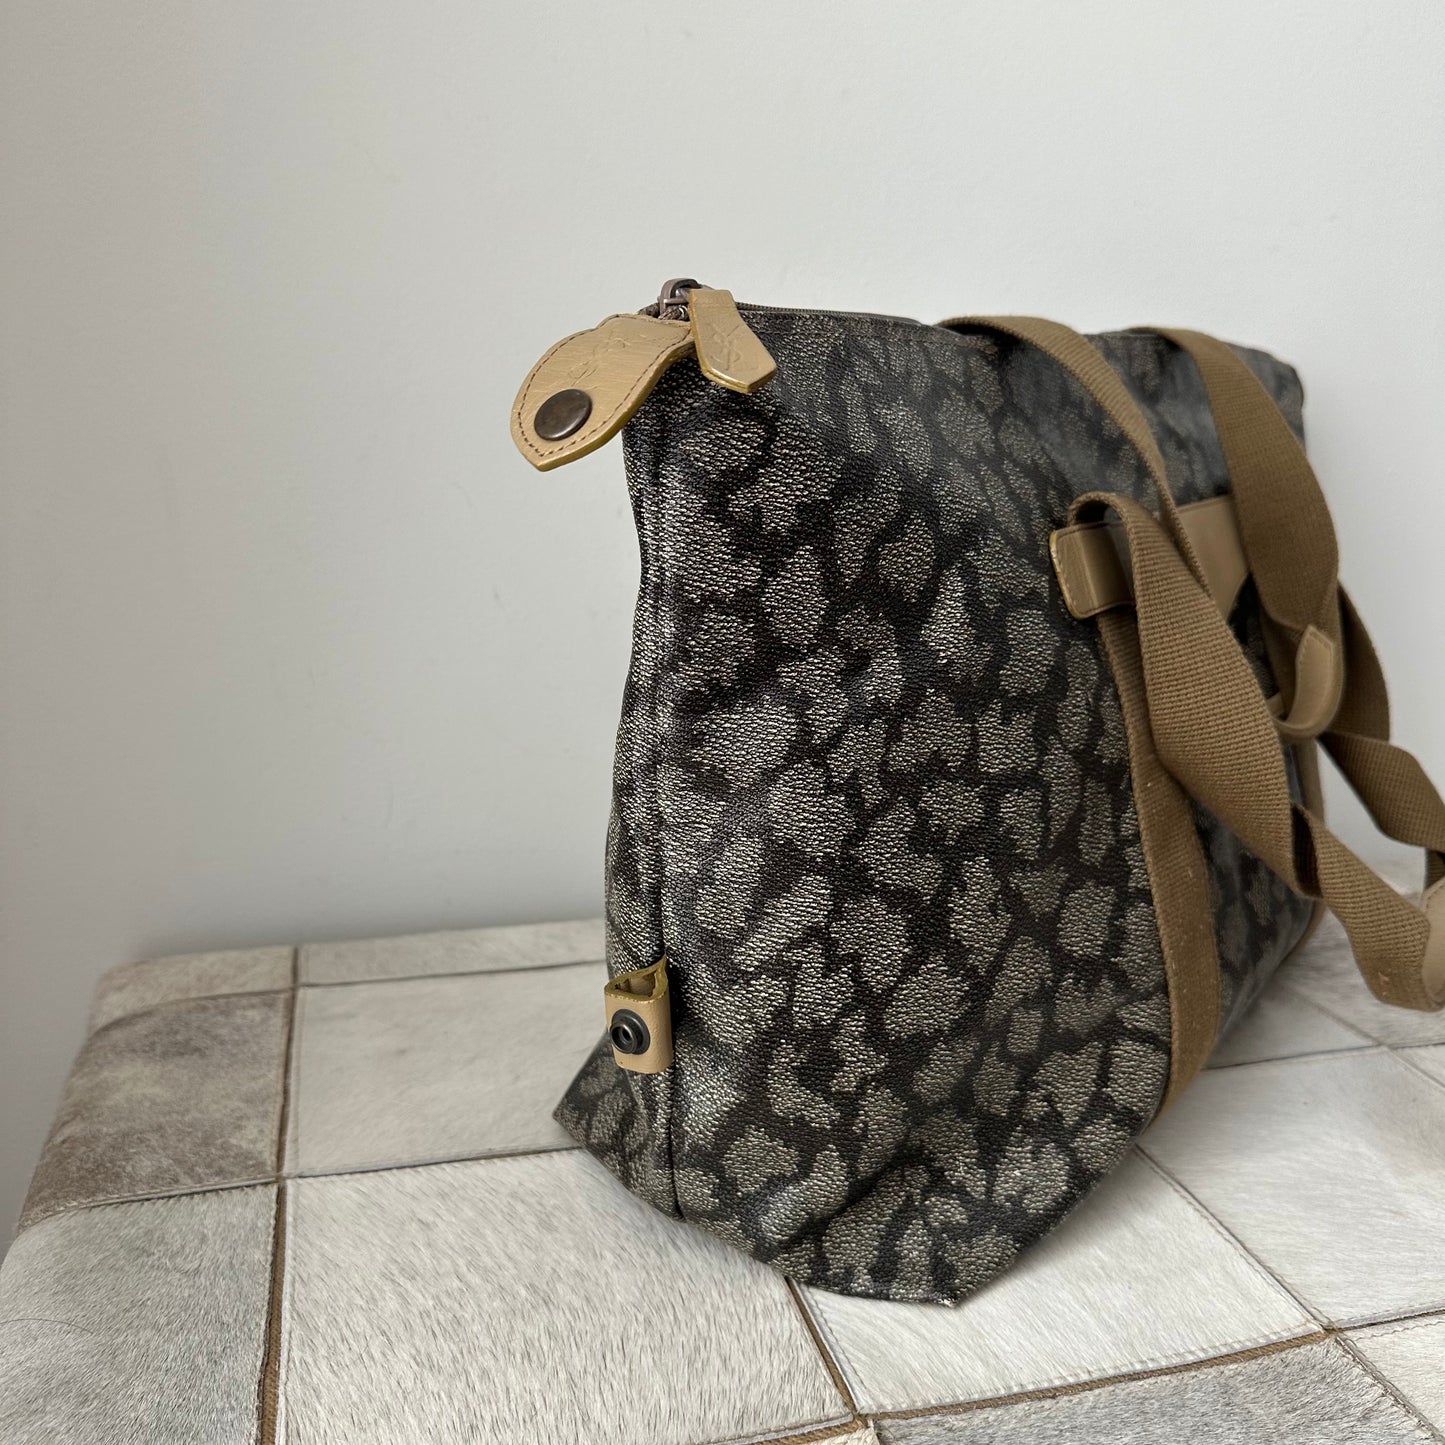 YSL Leather Giraffe Print Collapsible Tote Bag